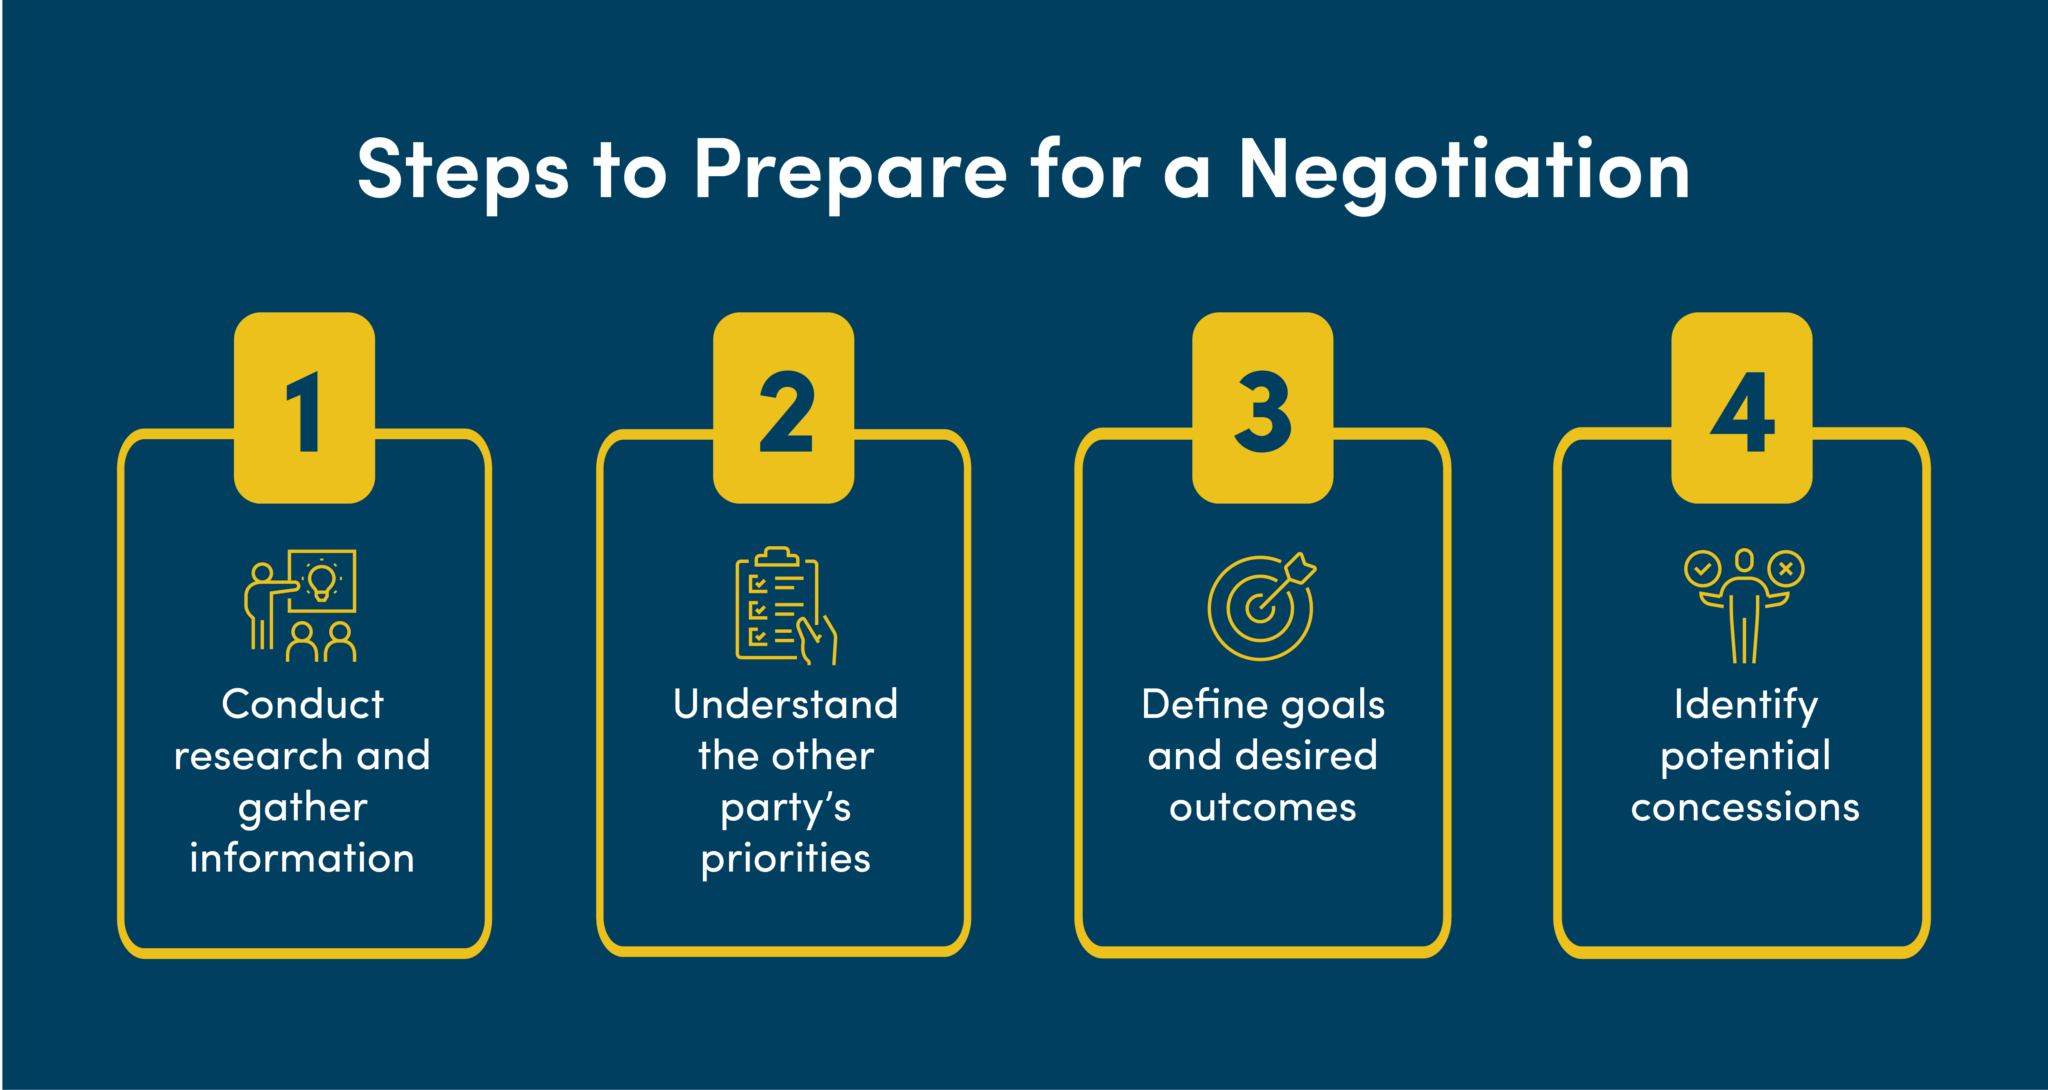 Steps to prepare for a negotiation